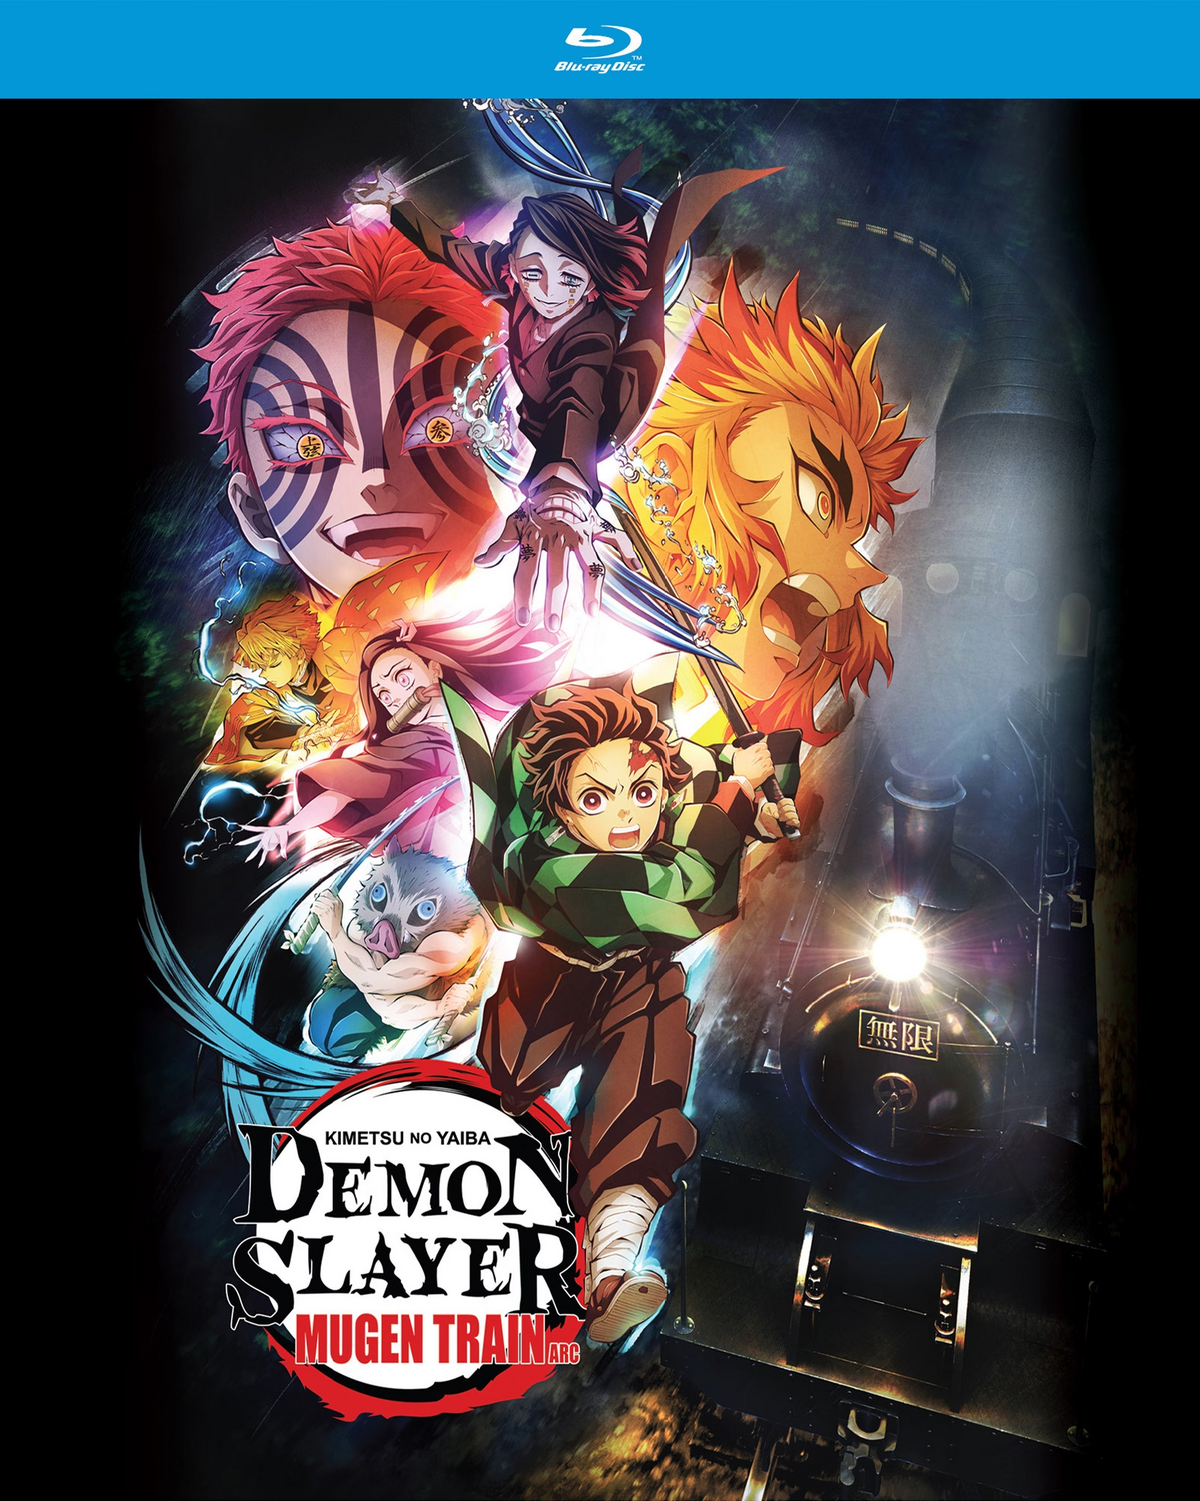 Demon Slayer: Kimetsu no Yaiba (English) on X: Demon Slayer: Kimetsu no  Yaiba Entertainment District Arc English dub Episode 6 Layered Memories  is streaming now on @Crunchyroll and @Funimation! 🔥   /